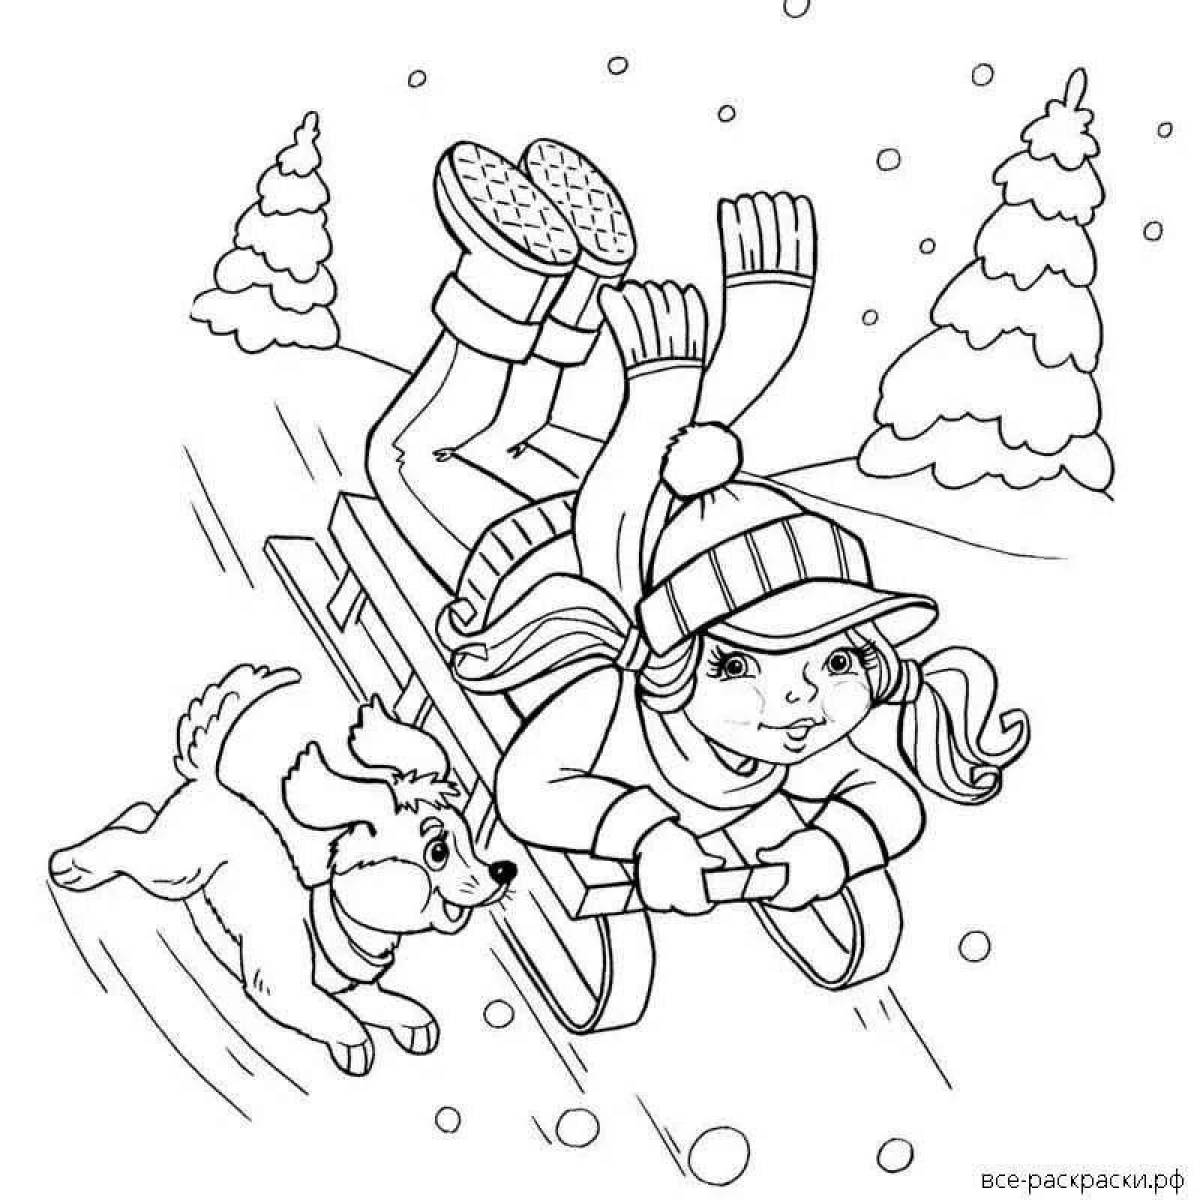 Charming winter fun coloring book